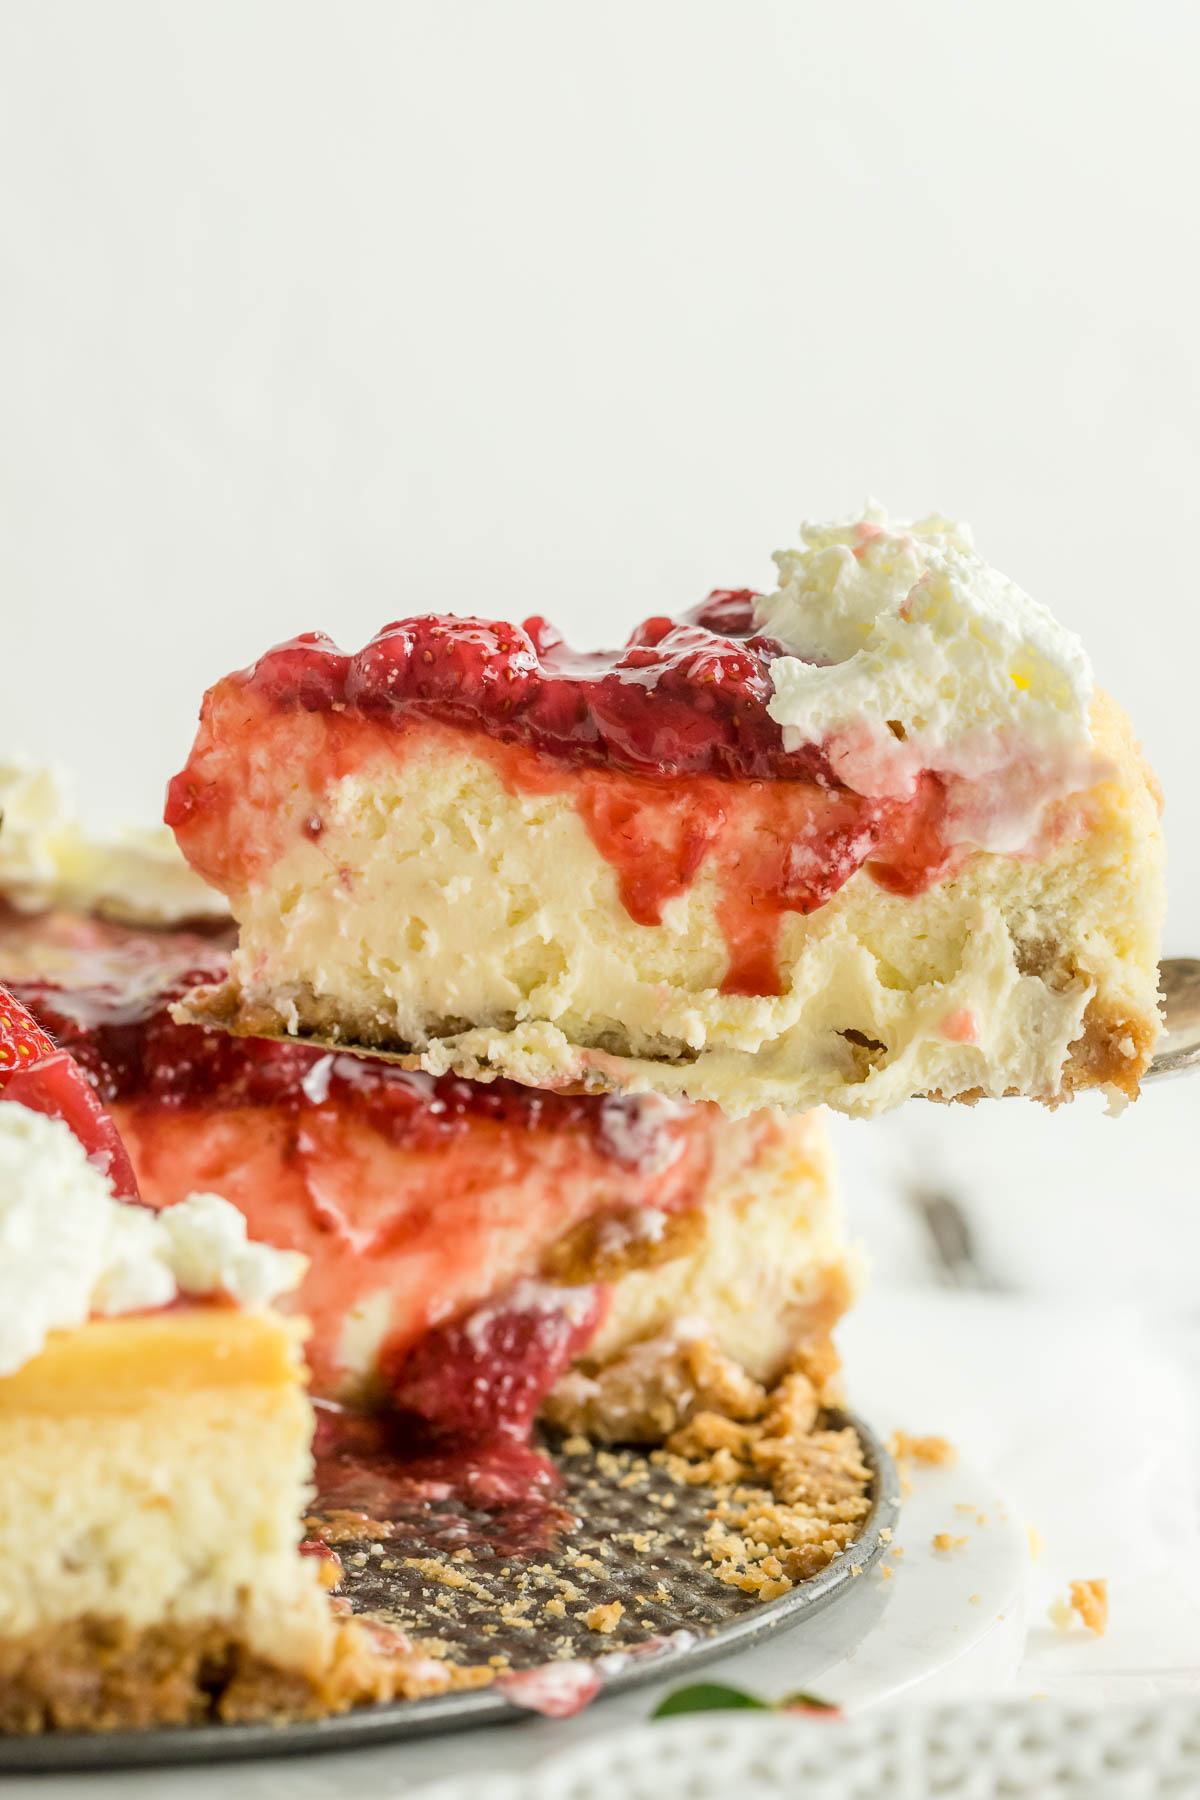 cake server holding a slice of strawberry cheesecake